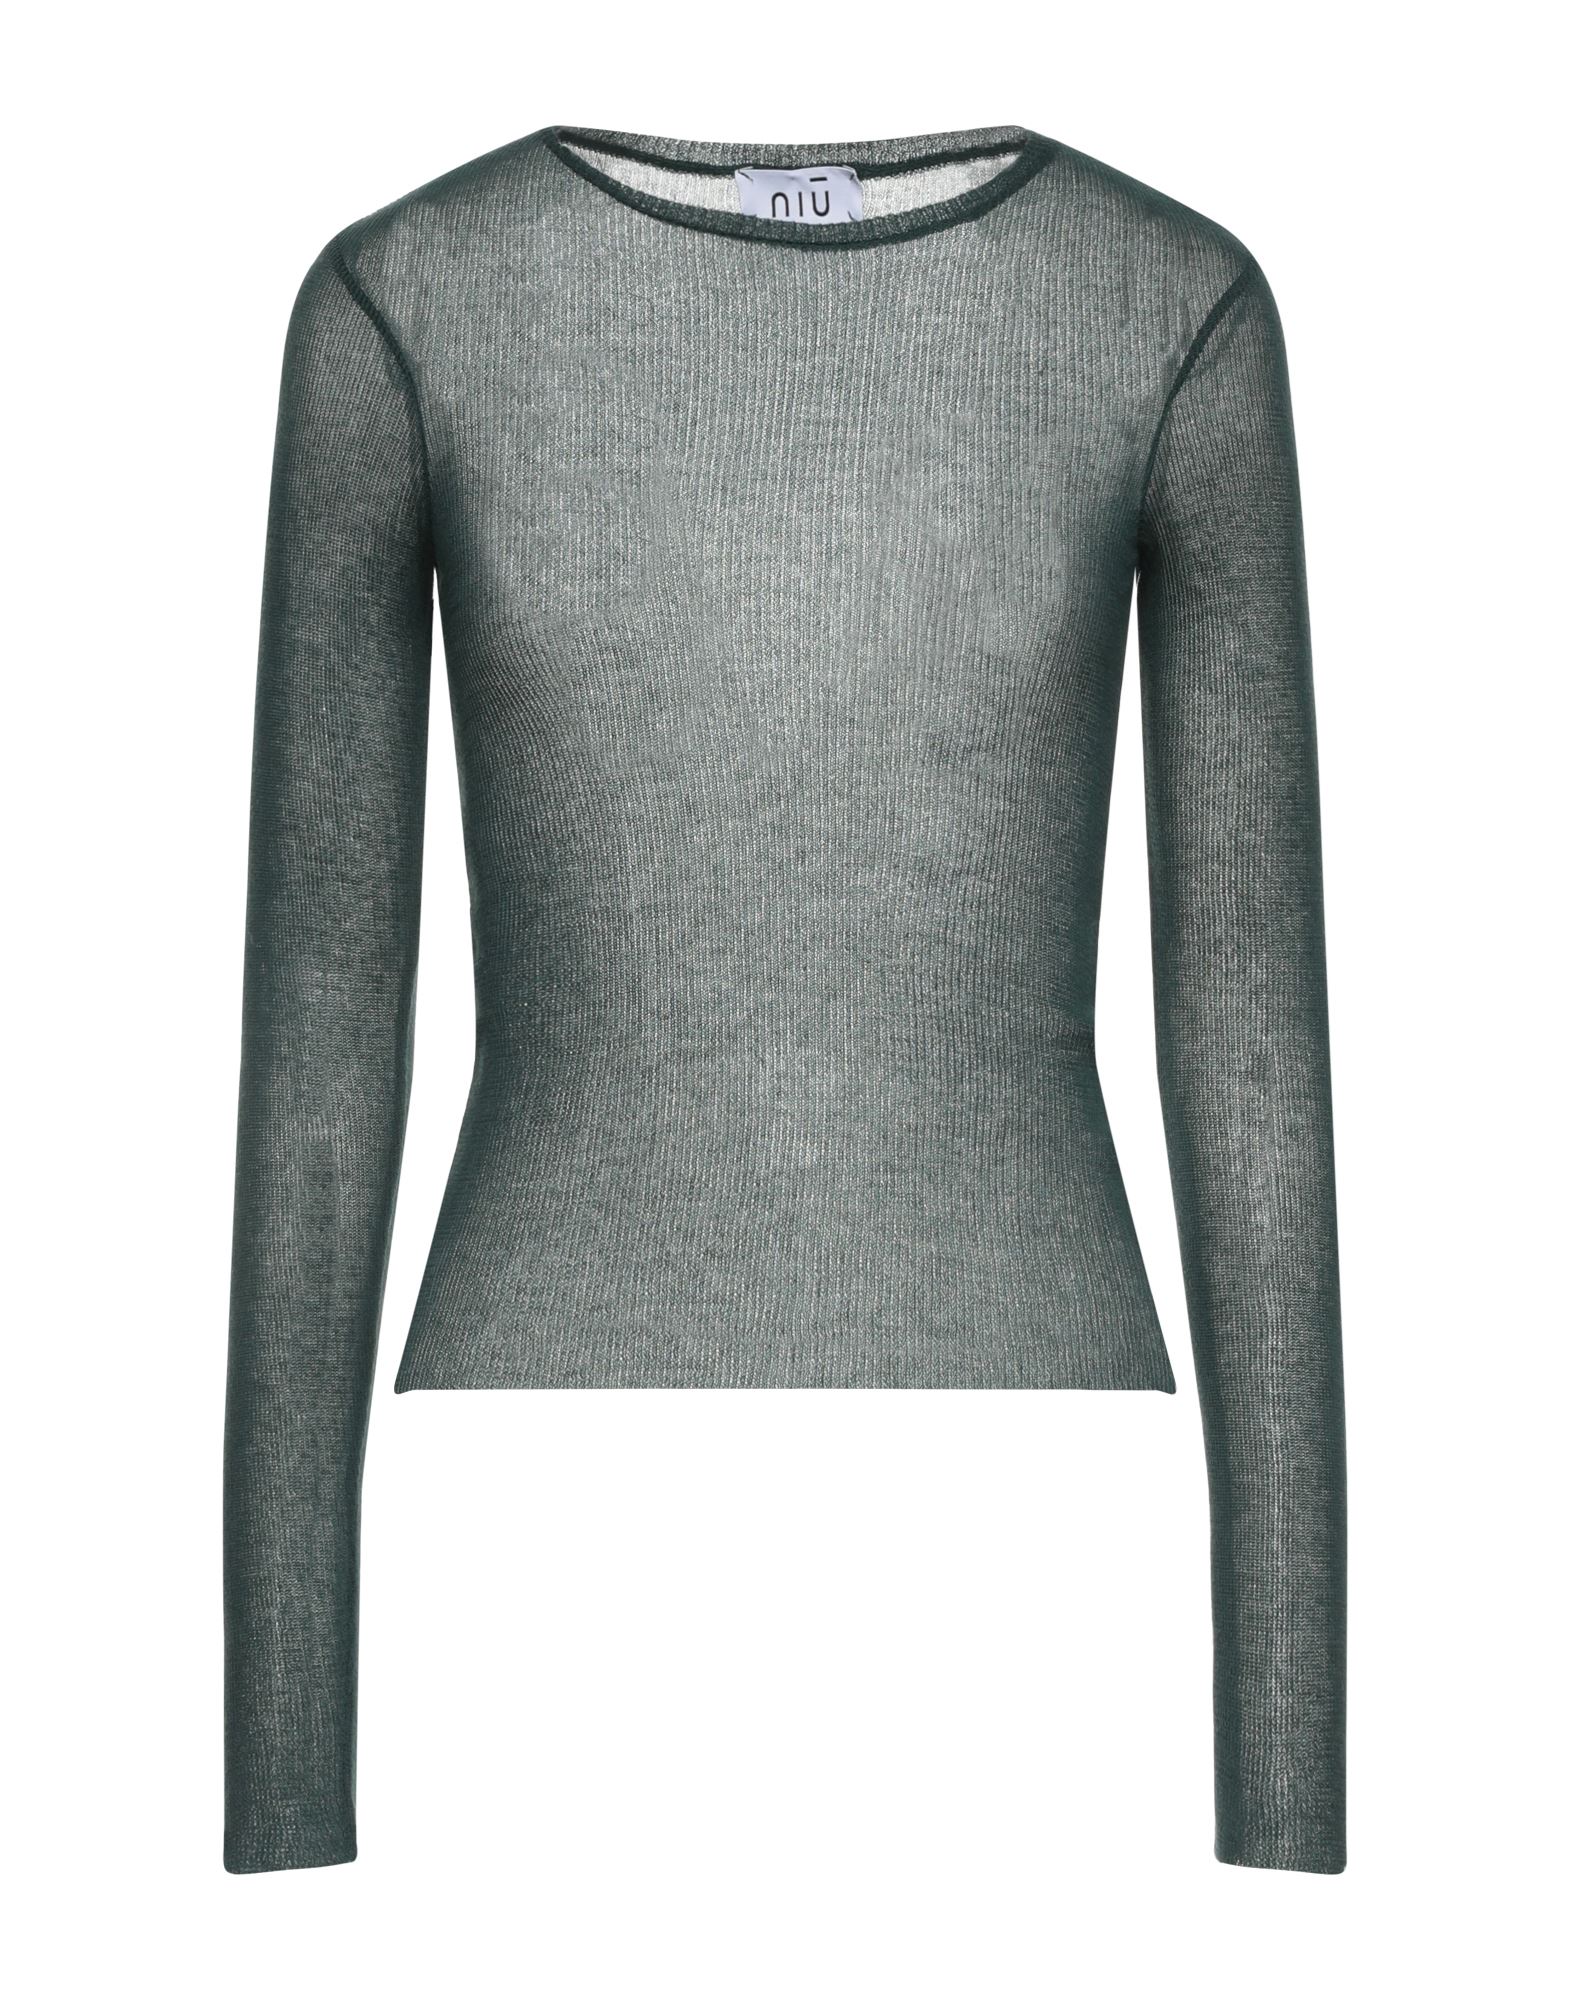 NIU Sweaters | Smart Closet